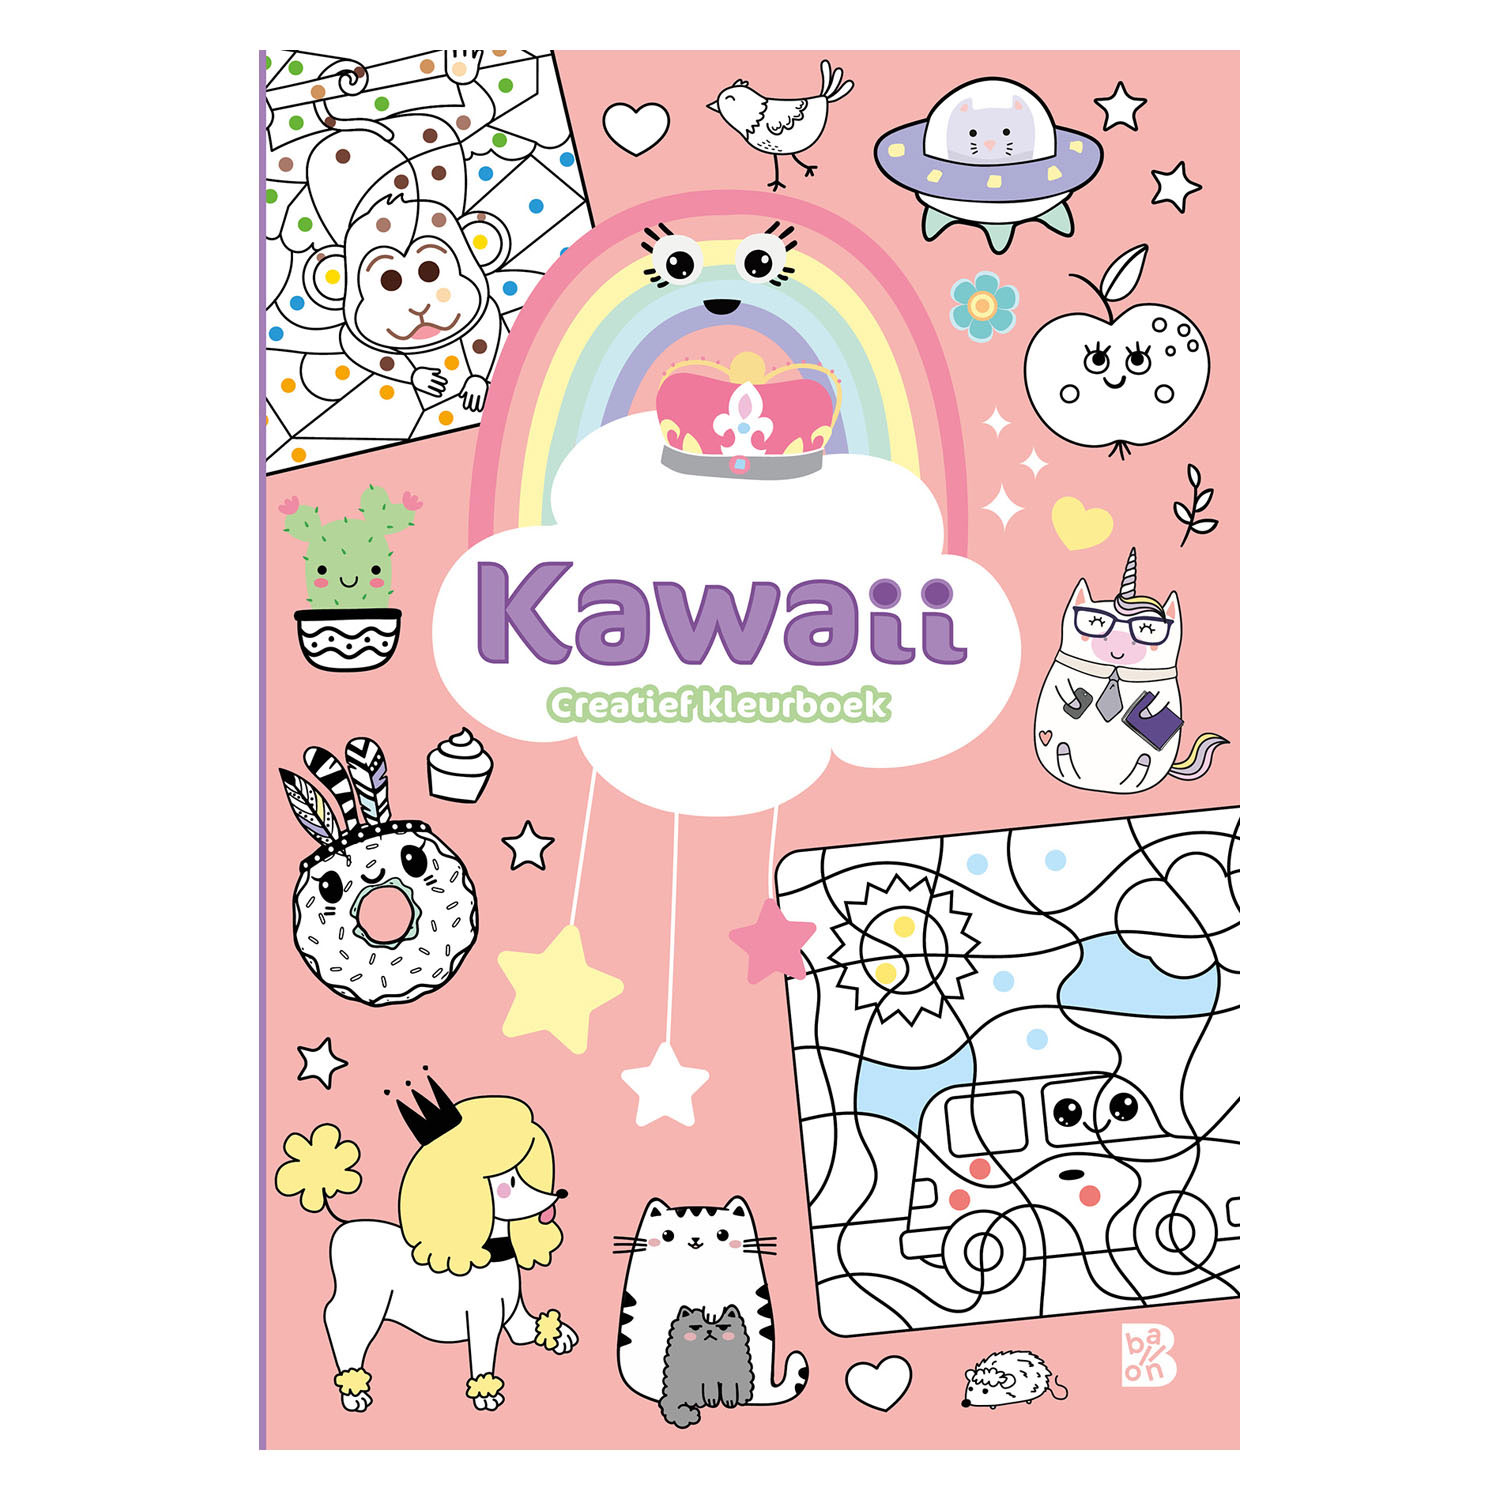 Kawaii kreatives Malbuch